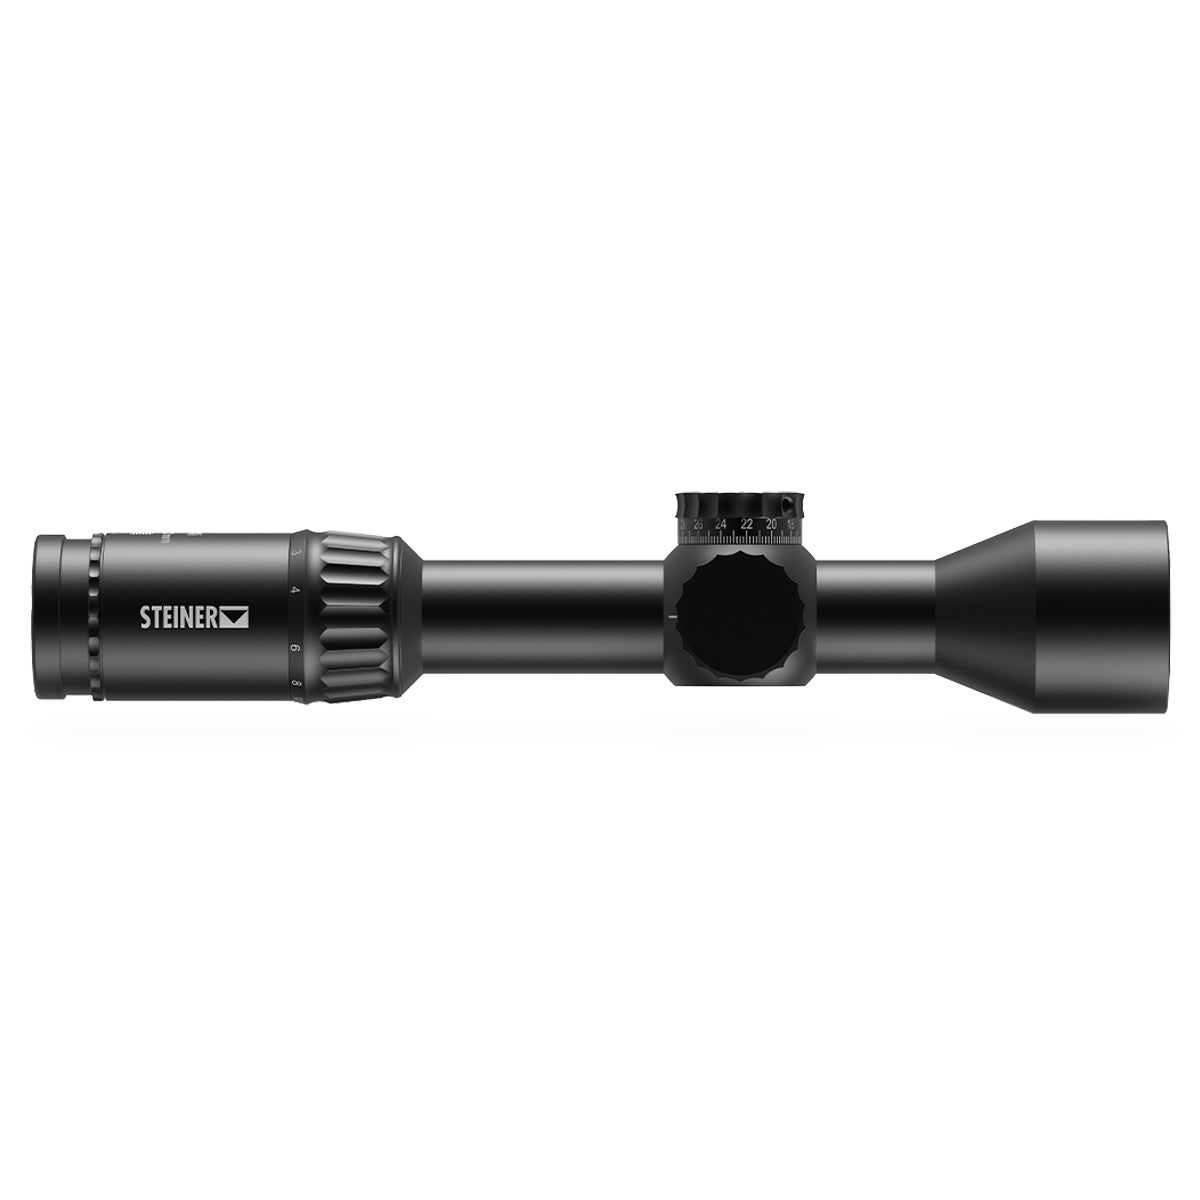 Steiner Optics H6Xi 2-12x42 MHR-MOA Riflescope